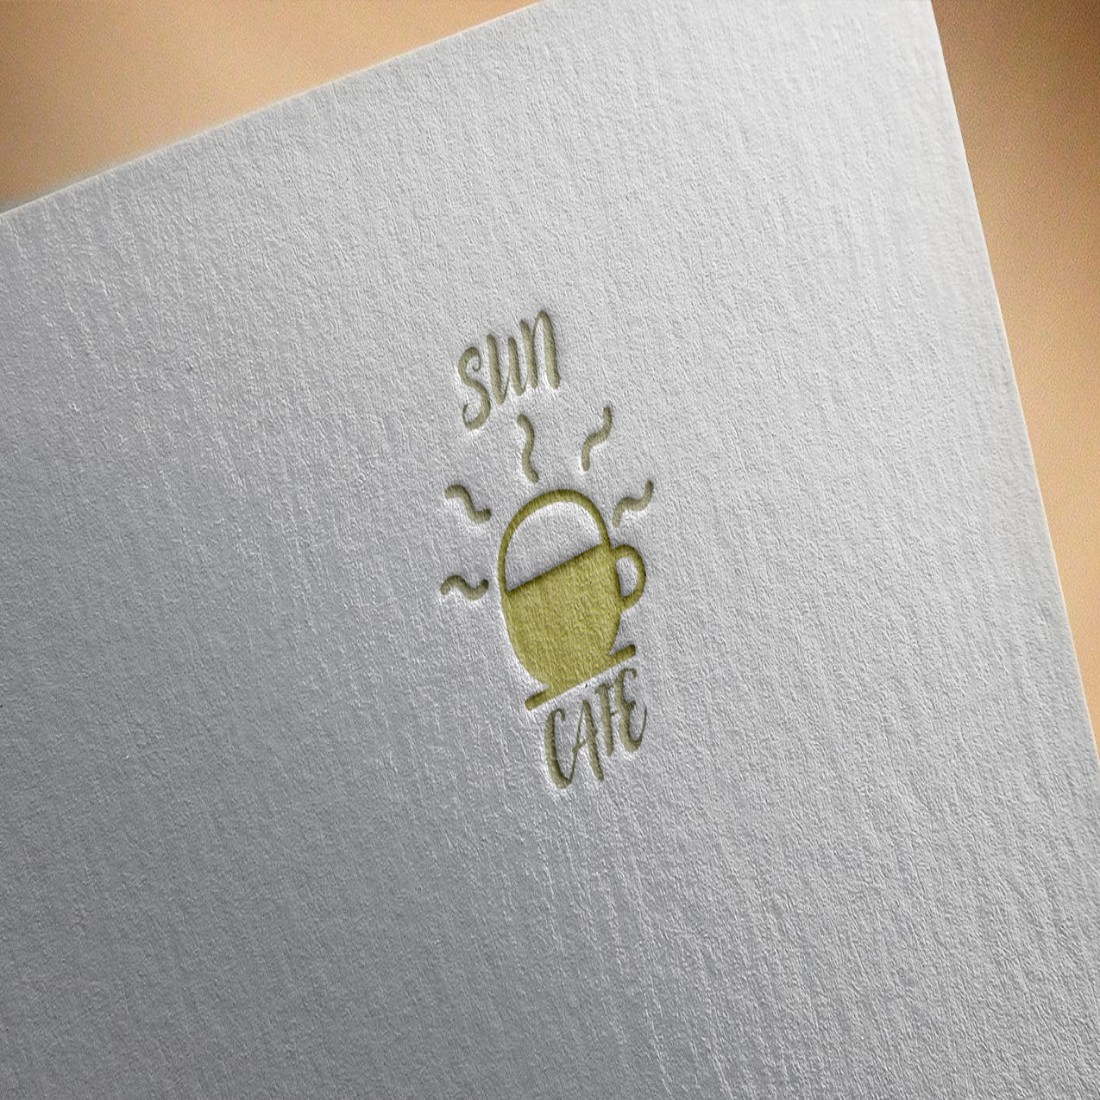 Sun Cafe Logo Design mockup example preview.